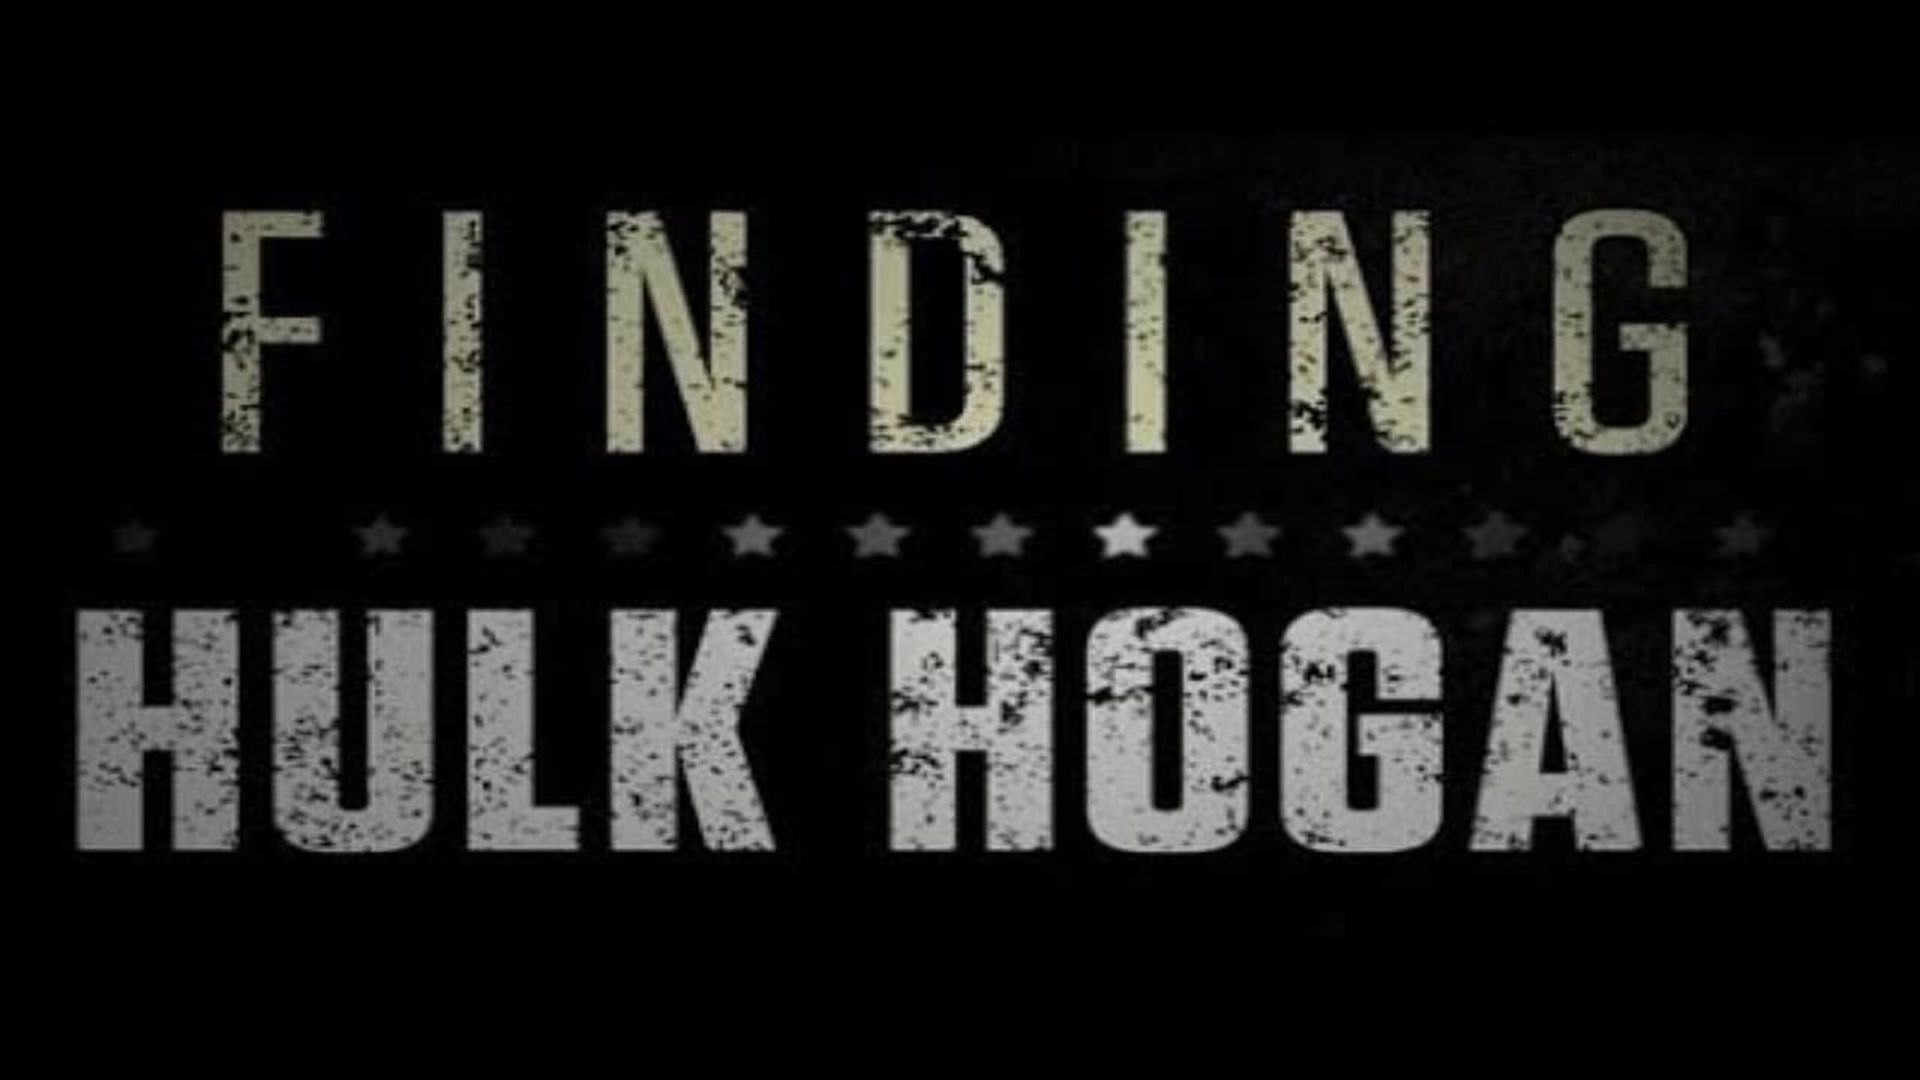 Finding Hulk Hogan background